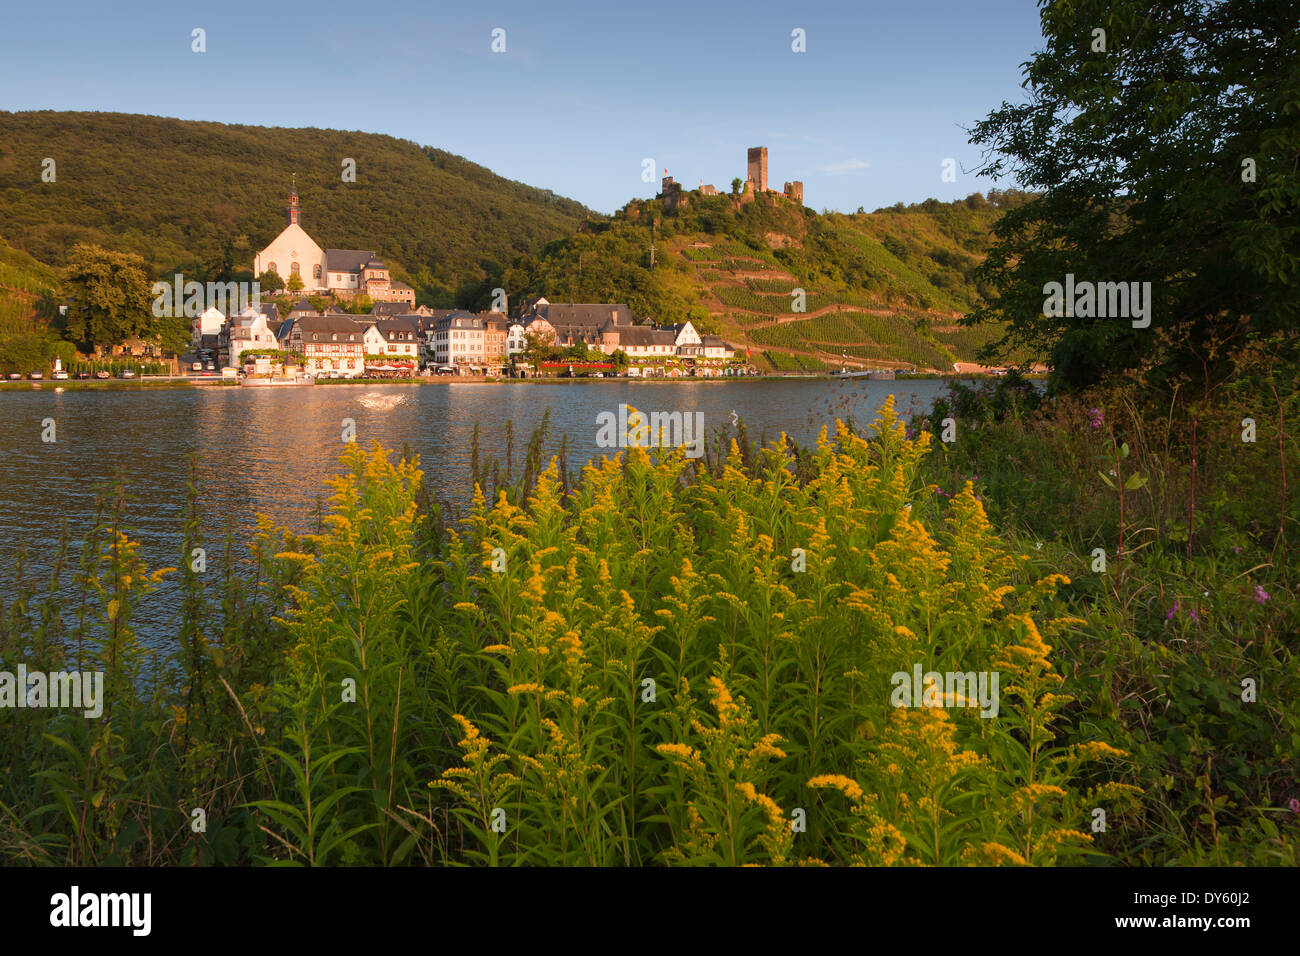 Et Beilstein château Metternich, Moselle, Rhénanie-Palatinat, Allemagne Banque D'Images